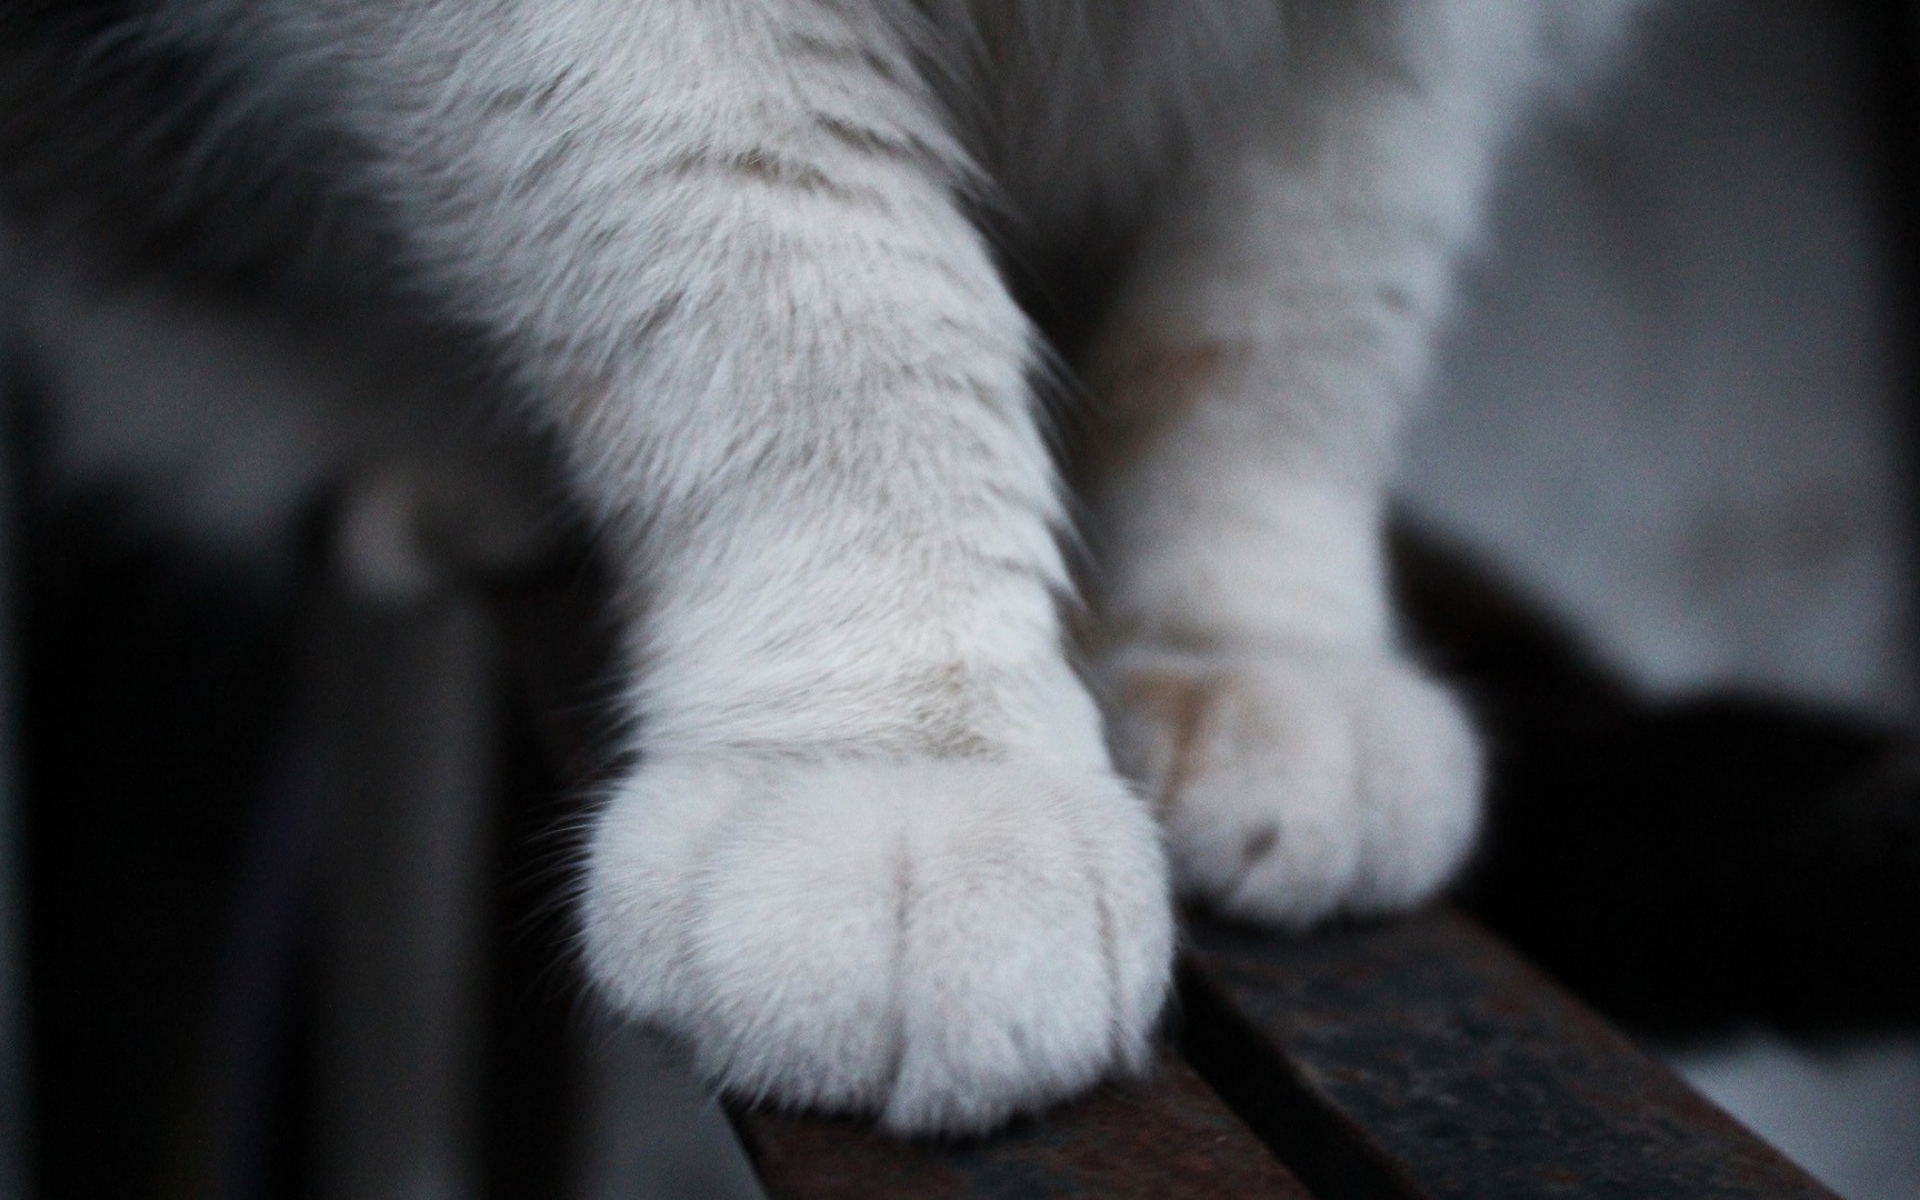 Теплые лапки. Лапка кота. Кошачья лапа. Ножки котика. Белые кошачьи лапки.